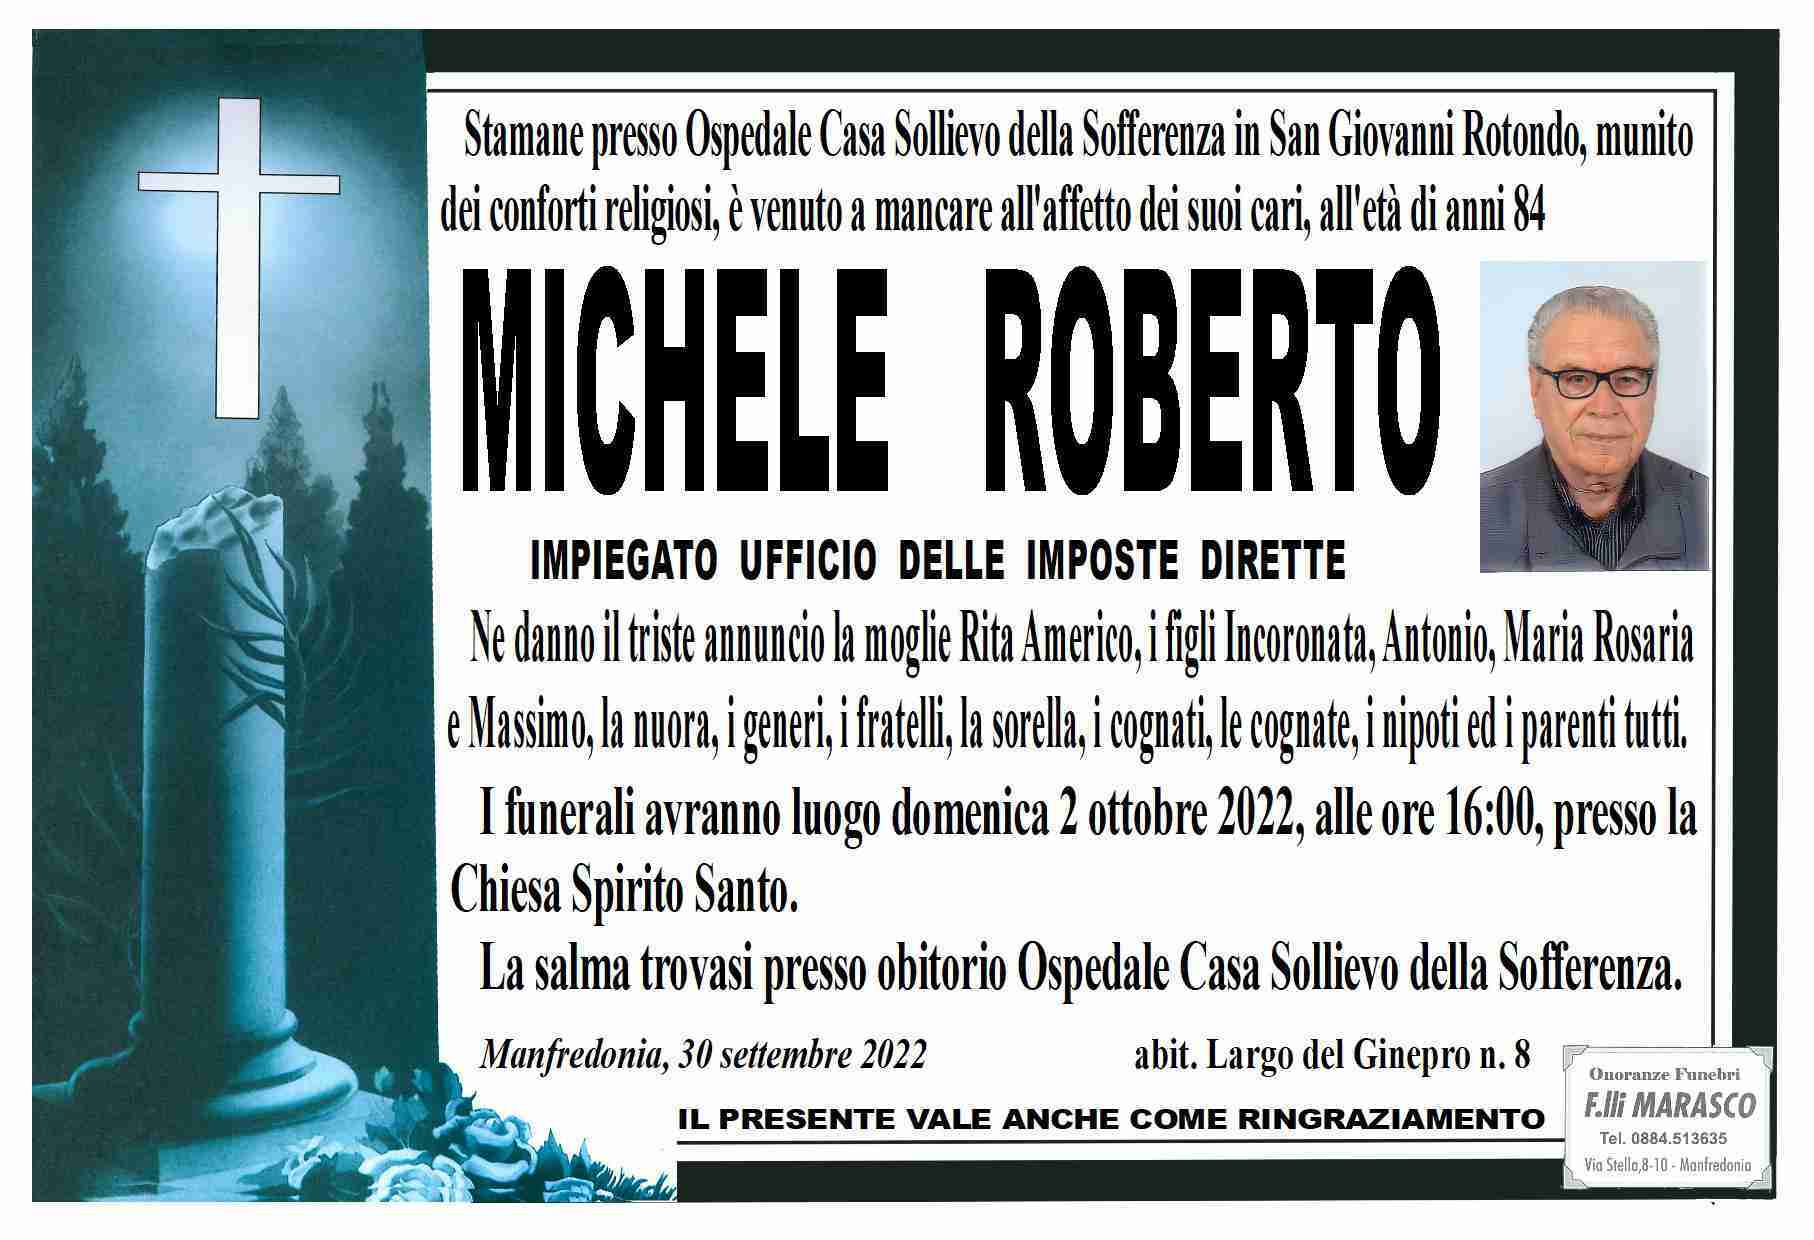 Michele Roberto